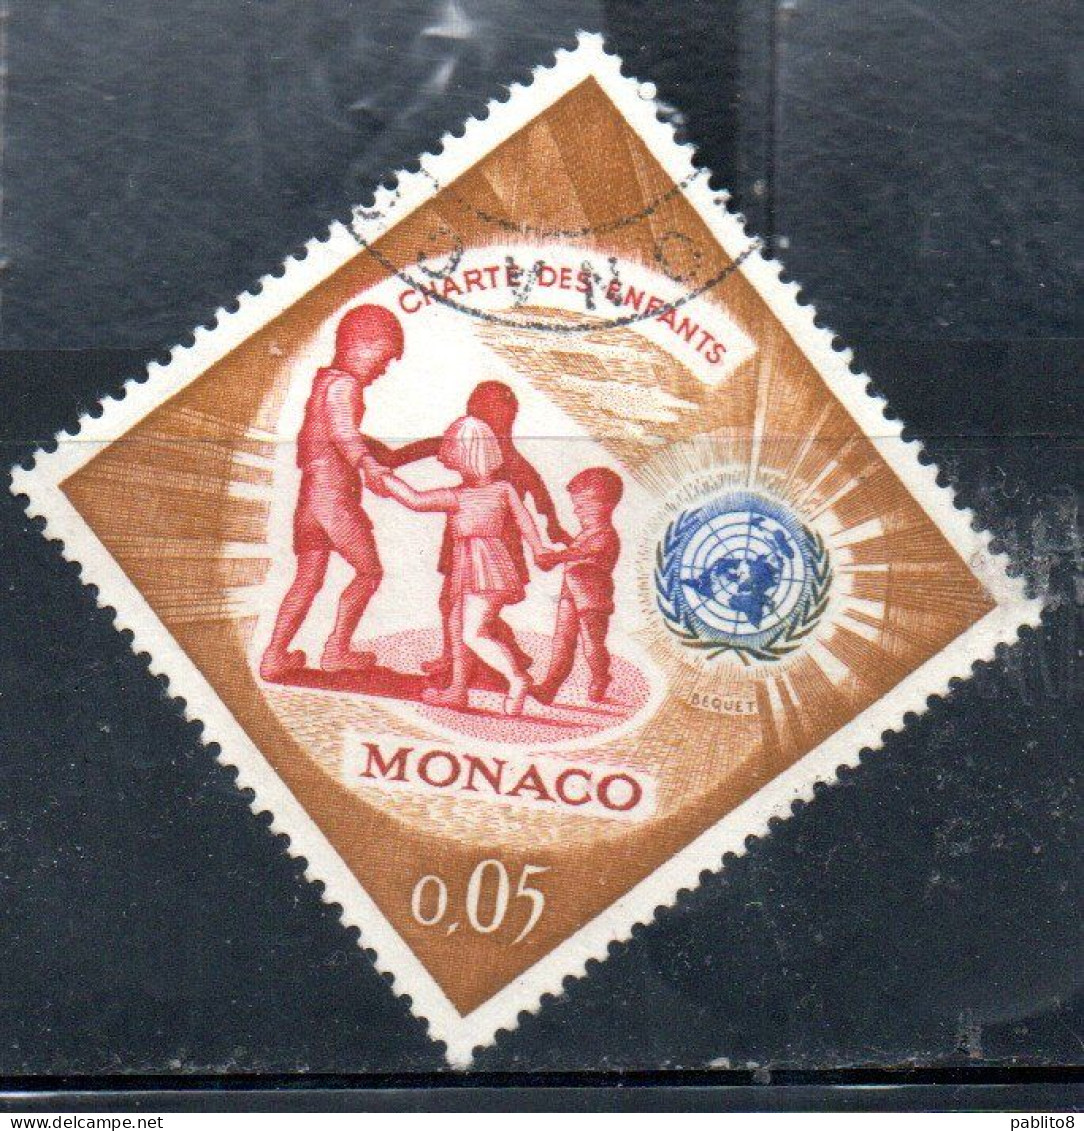 MONACO 1963 UN ONU CHILDREN' CHARTER DANCING AND UN ONU EMBLEM 5c USED USATO OBLITERE' - Usati